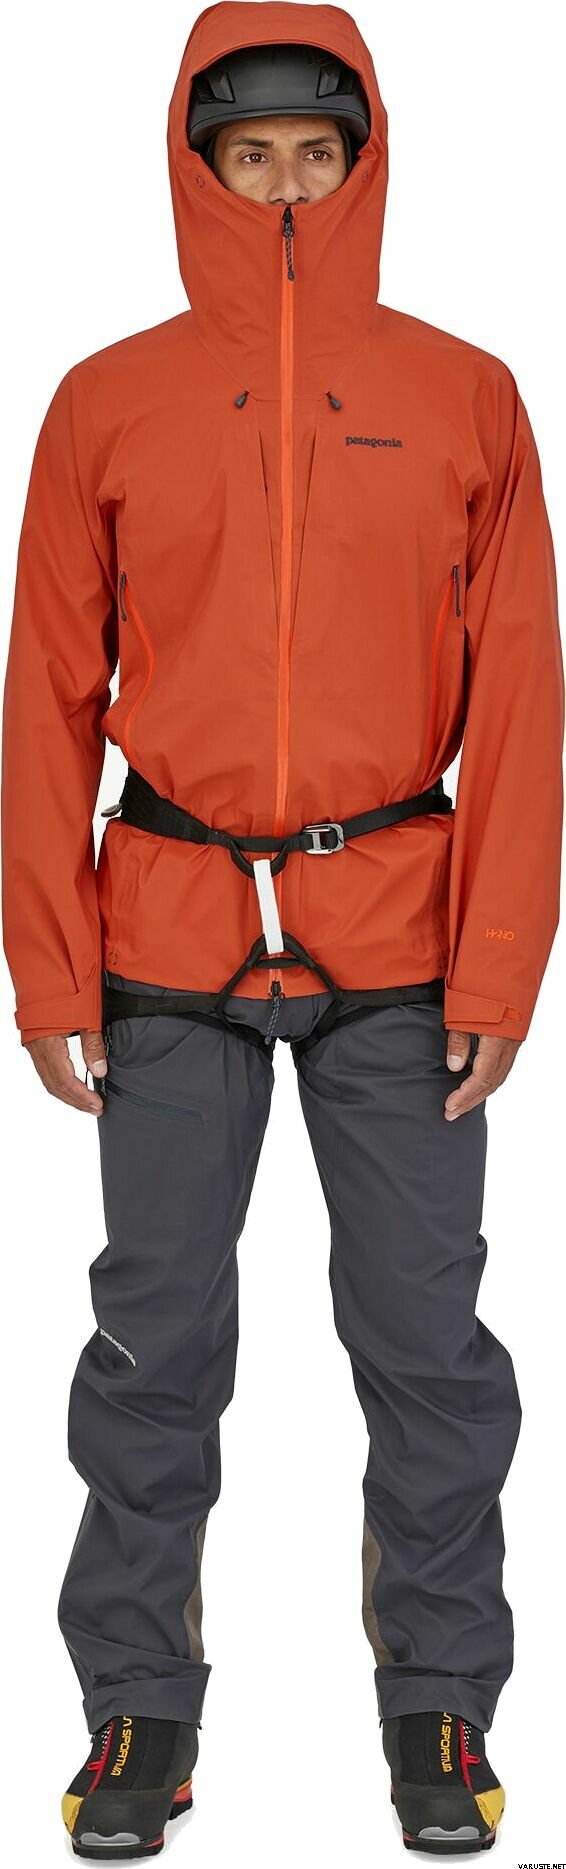 Patagonia Dual Aspect Jacket Mens | Ski Jackets | Varuste.net English